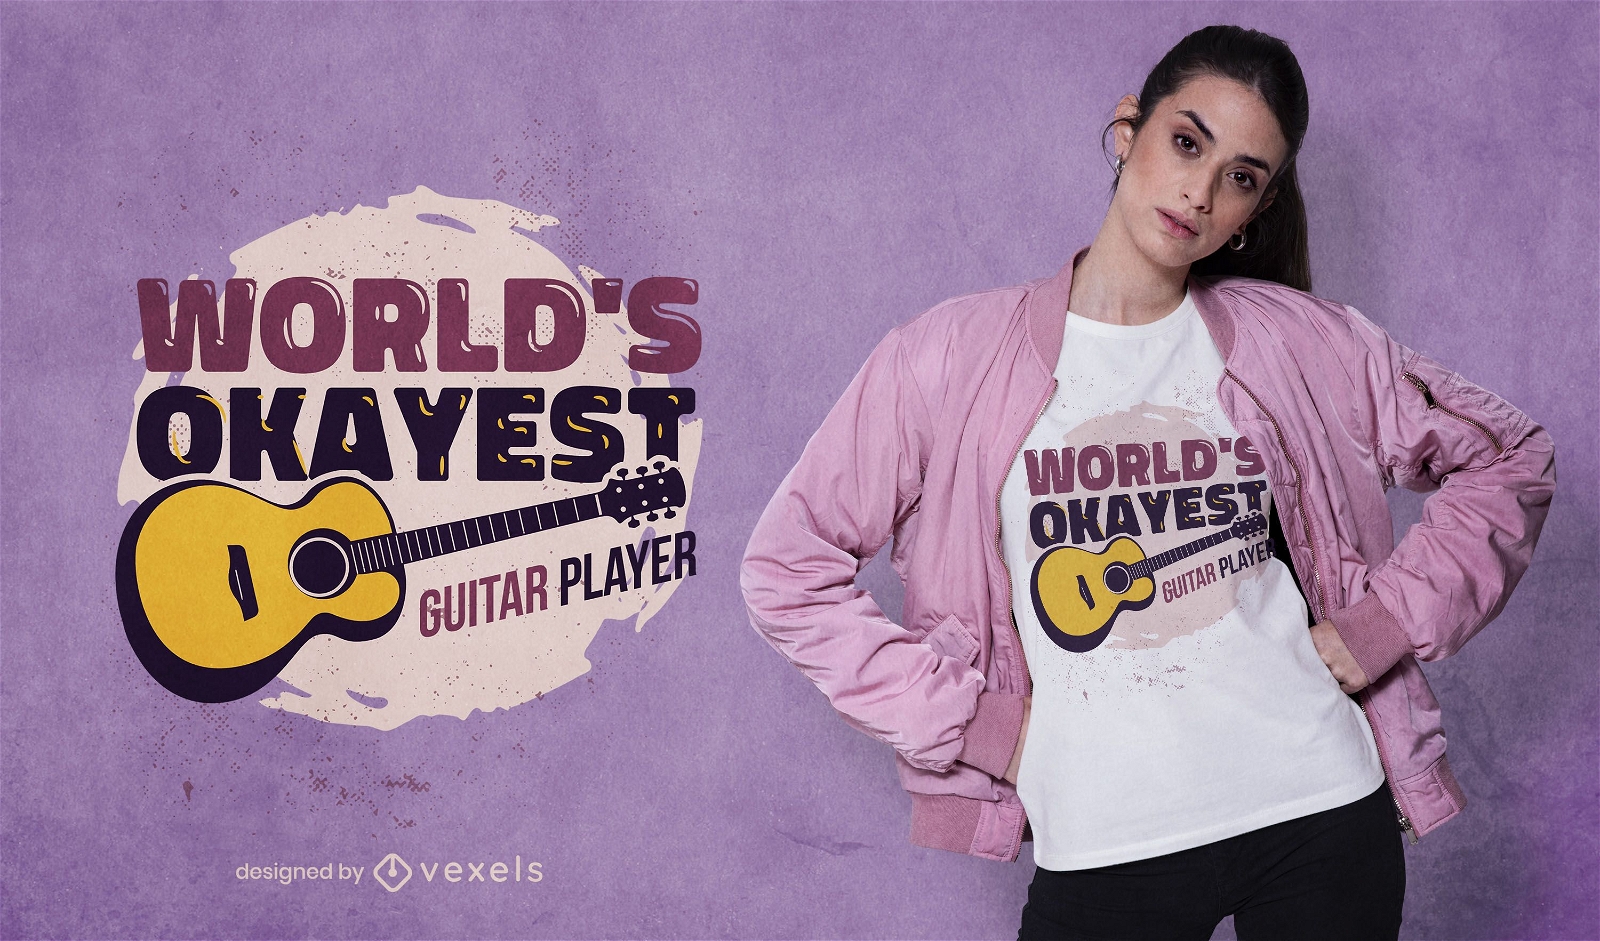 Worlds okayest guitar player t-shirt design